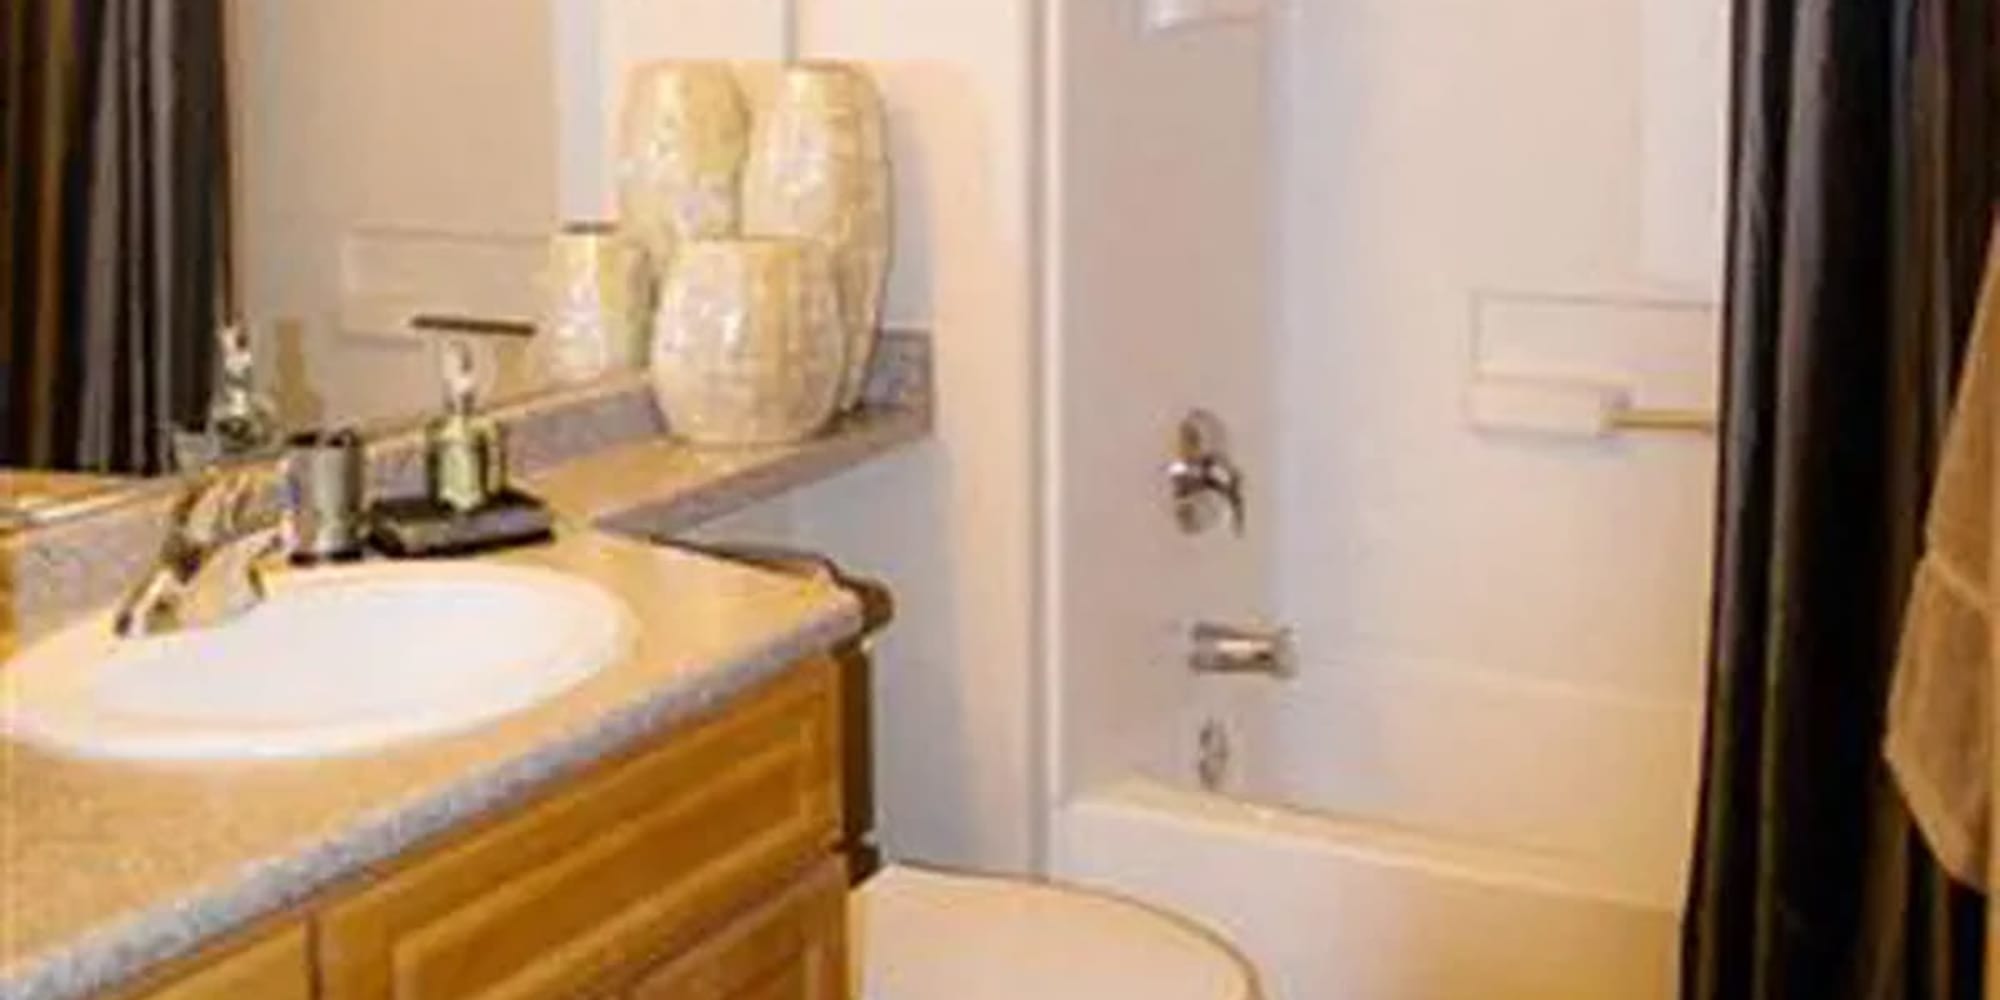 Bathroom with shower tub at Siena Villas Apartments in Elk Grove, California